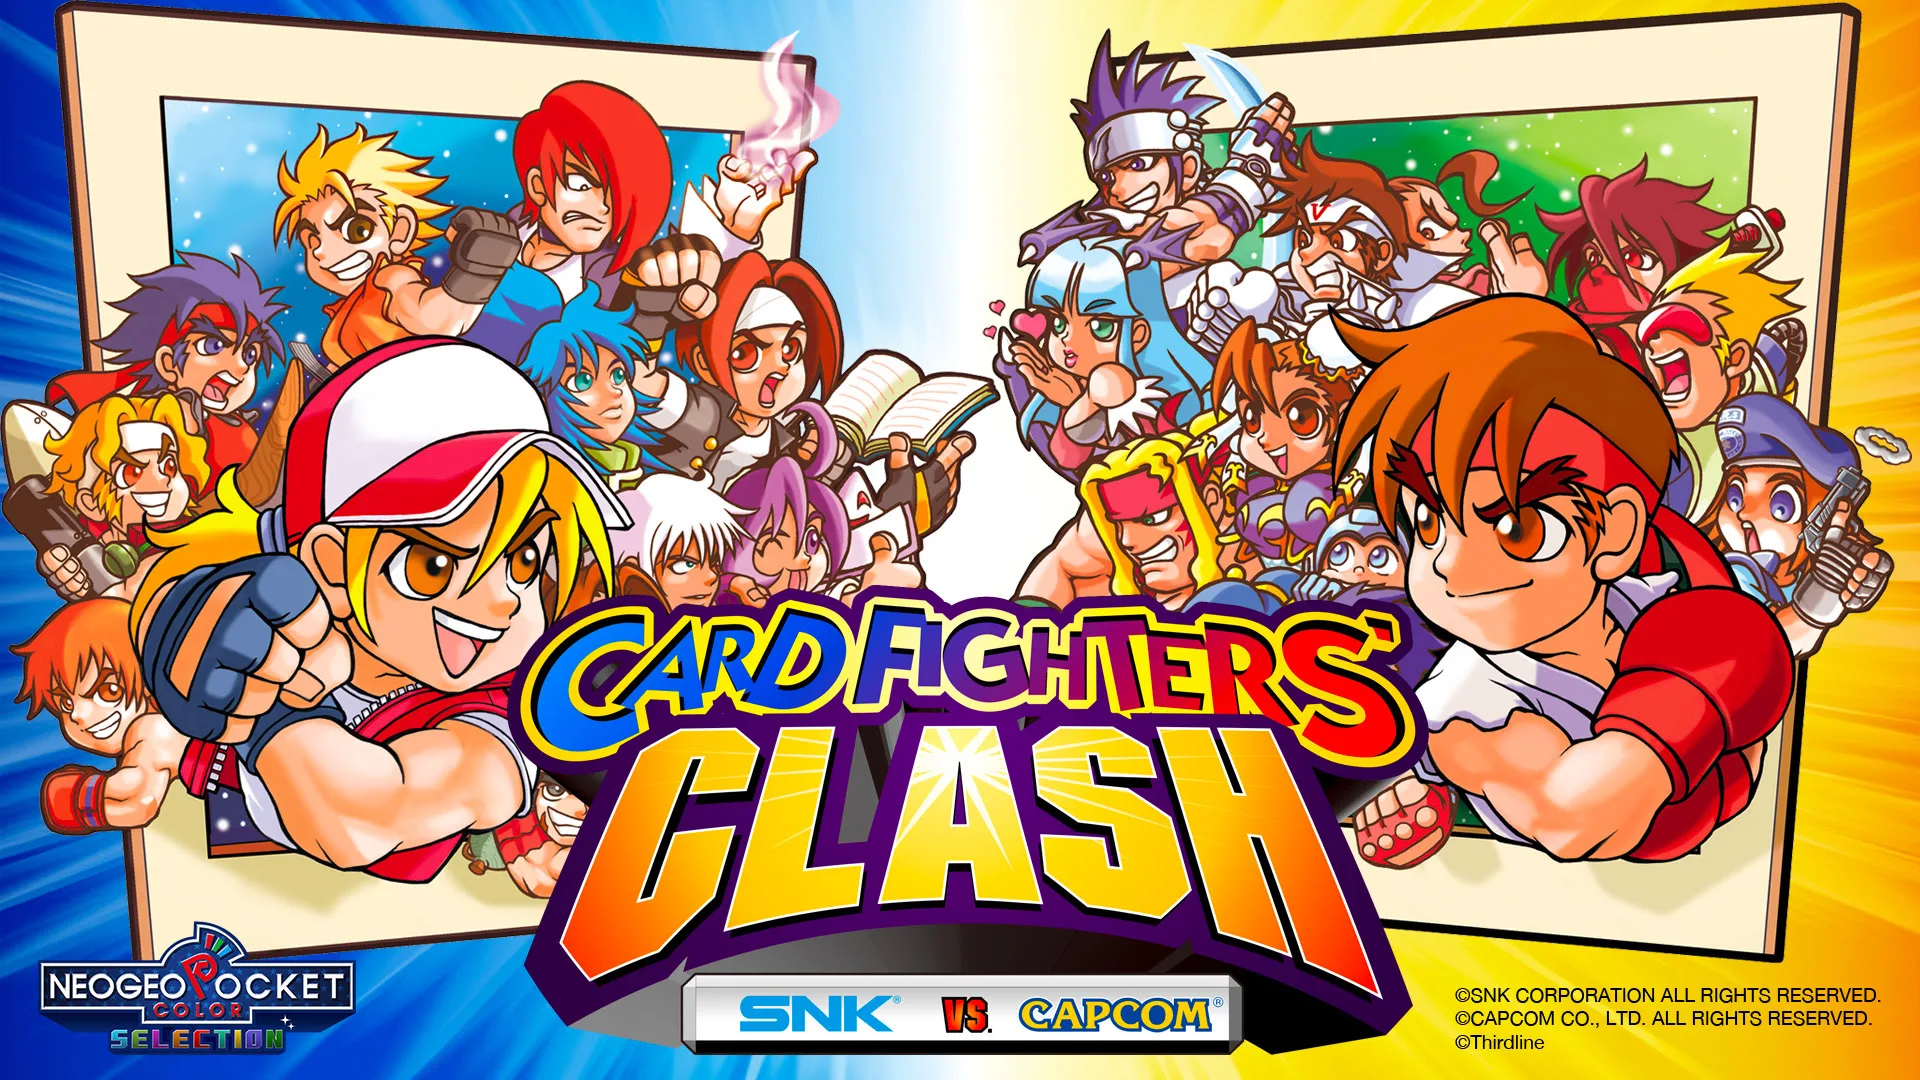 snk-vs.-capcom-card-fighters-clash